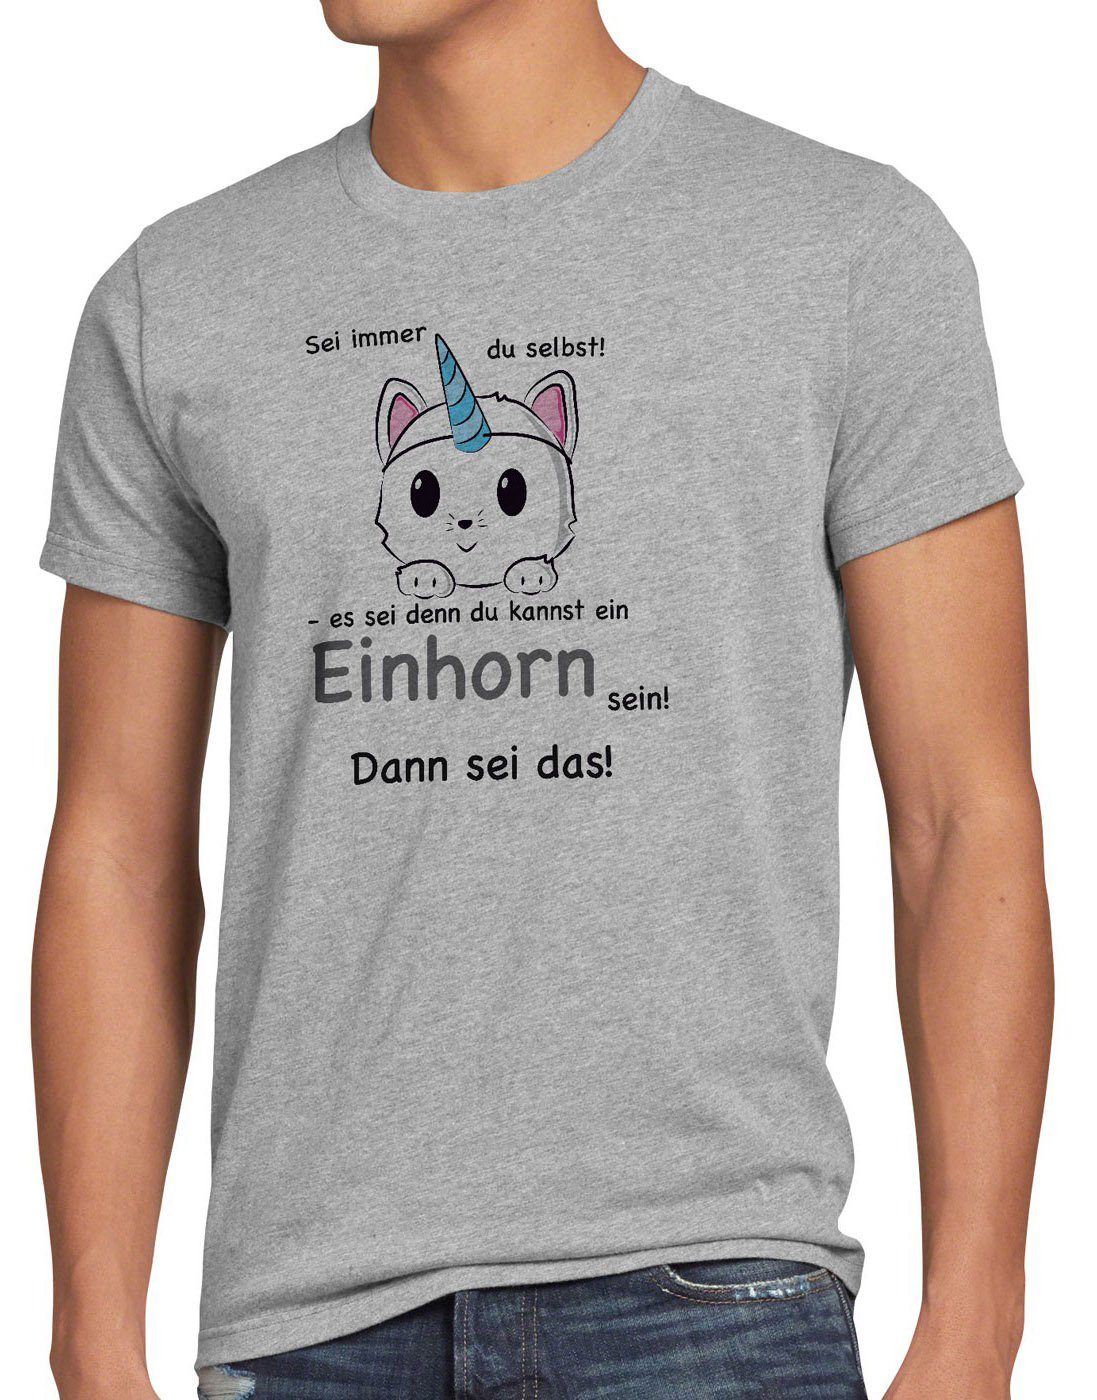 denn Herren grau du immer selbst! T-Shirt Spruch Fun Sei style3 Einhorn sei es Unicorn meliert Katze Print-Shirt